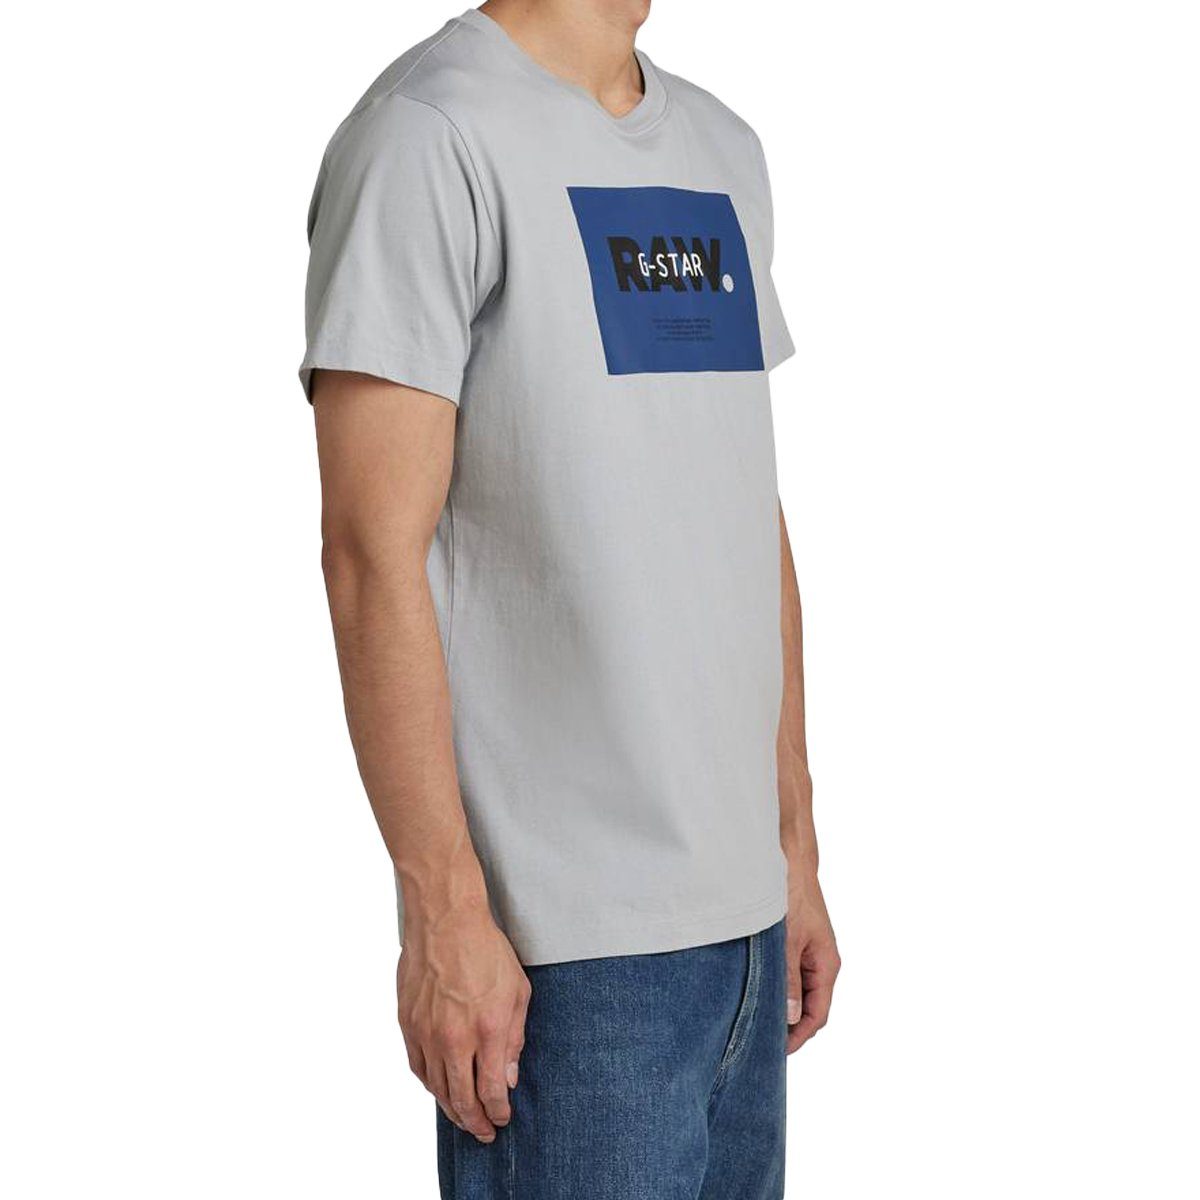 Rundhals, r hd Herren Logo t, - RAW G-Star Hellgrau T-Shirt Raw. T-Shirt